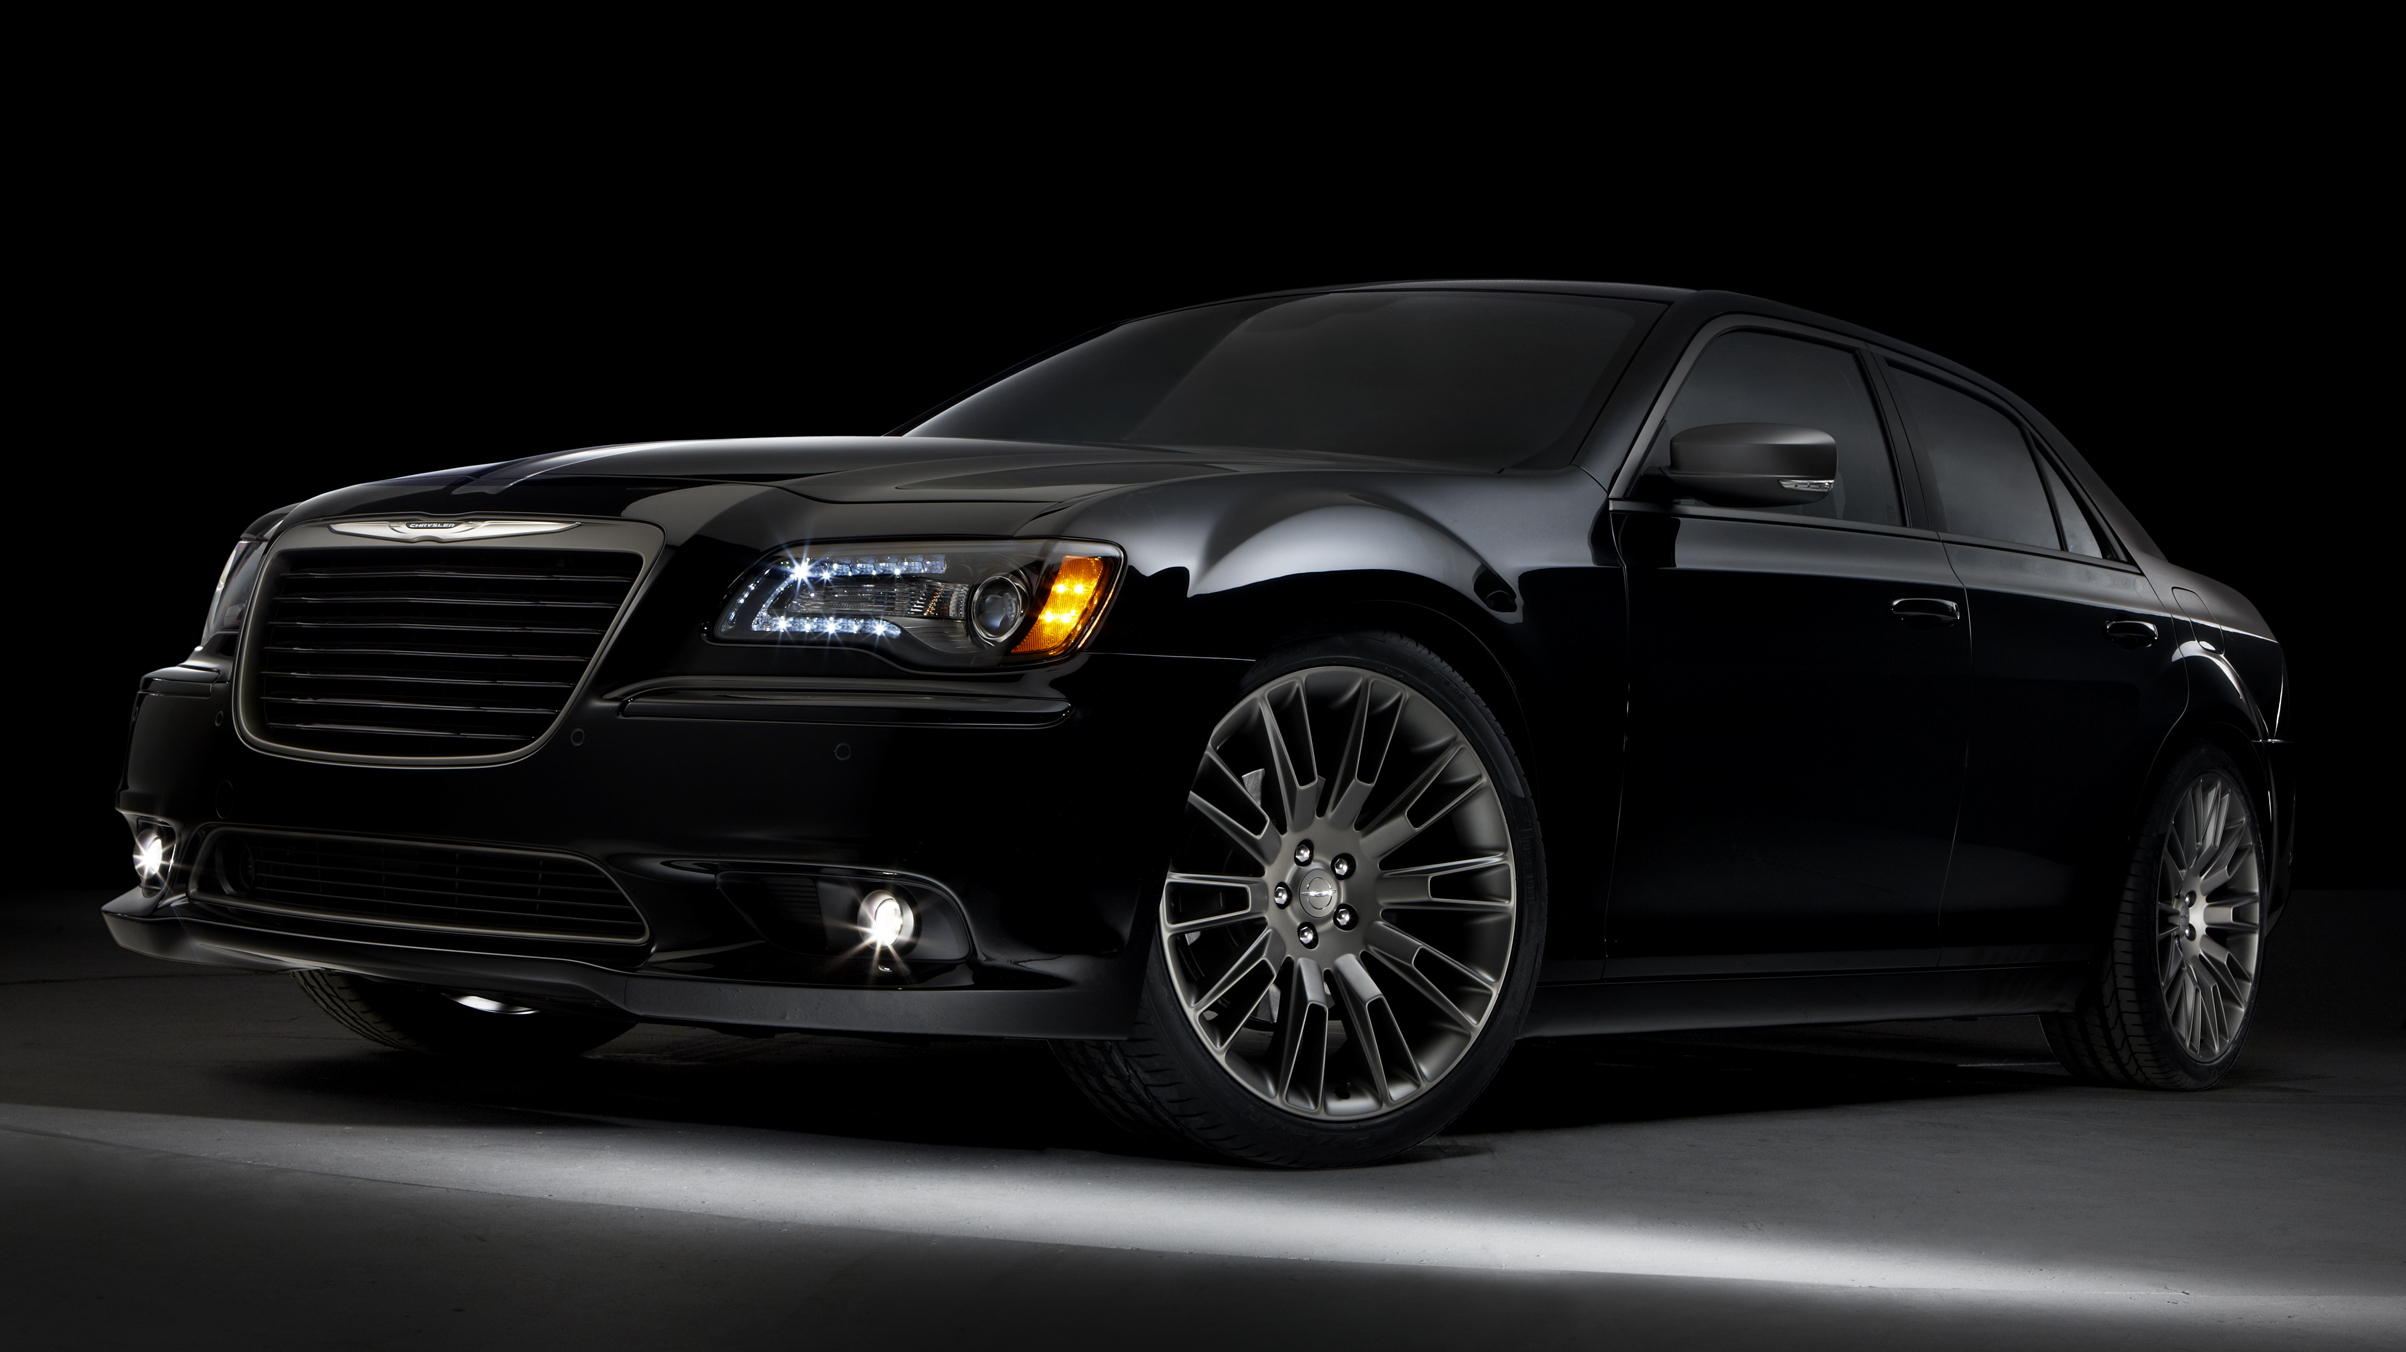 STYLIN' & PROFILIN': 2013 Chrysler 300C Varvatos Limited & Luxury Editions!  - MoparInsiders